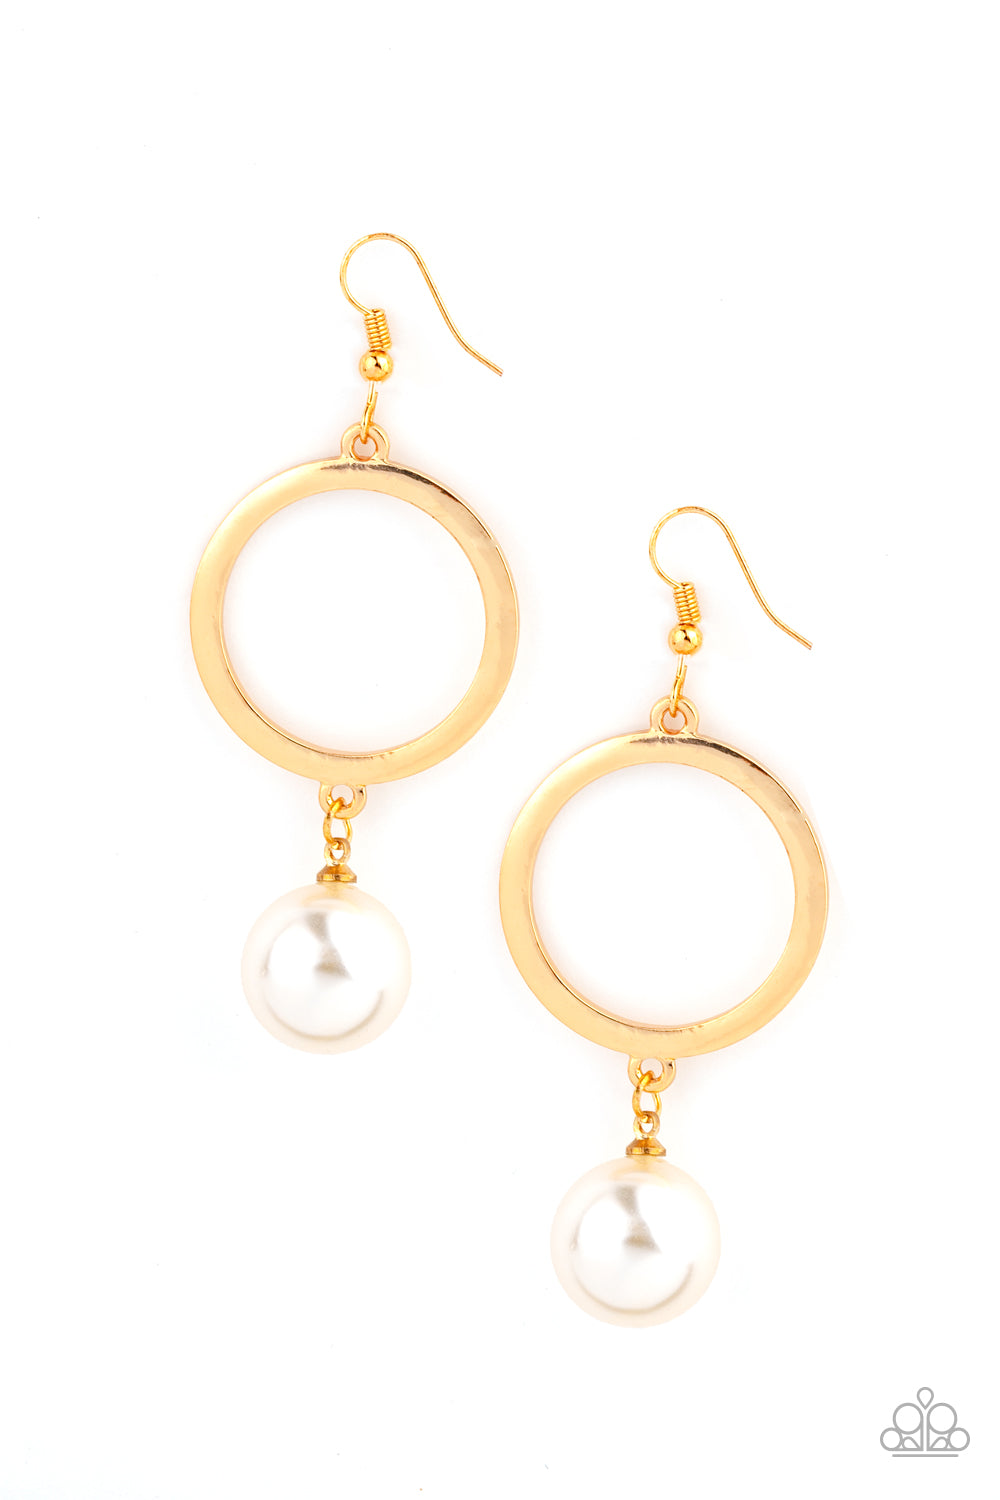 Soho Solo Gold Earrings Paparazzi Accessories Bedazzle Me Pretty Mobile Fashion Boutique